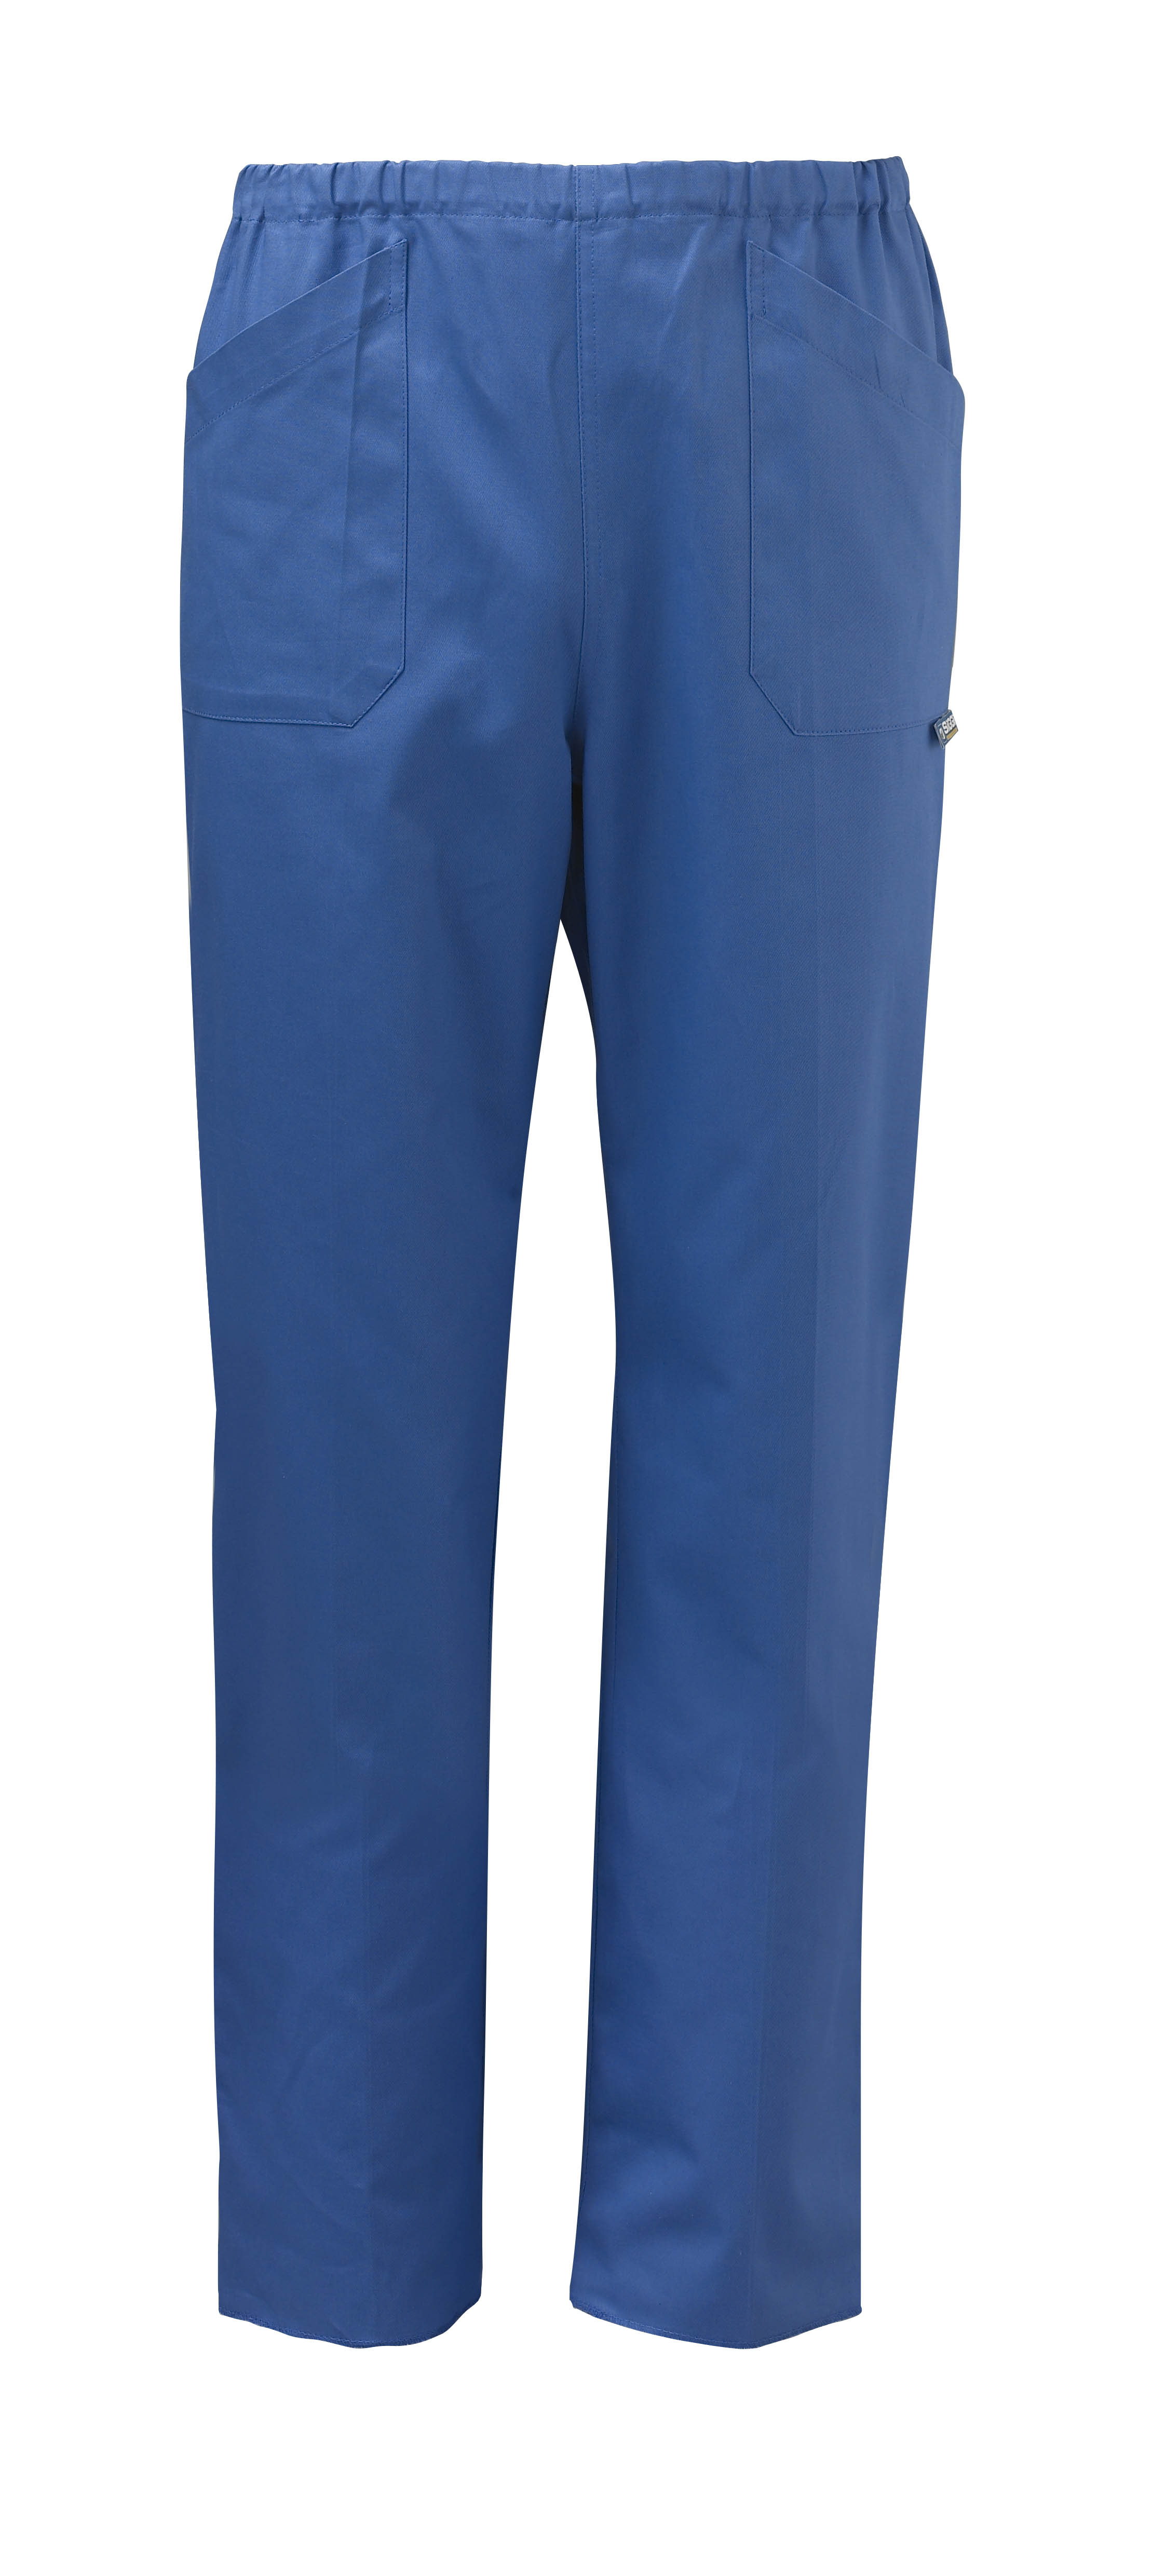 Pantaloni Unisex elastico blu